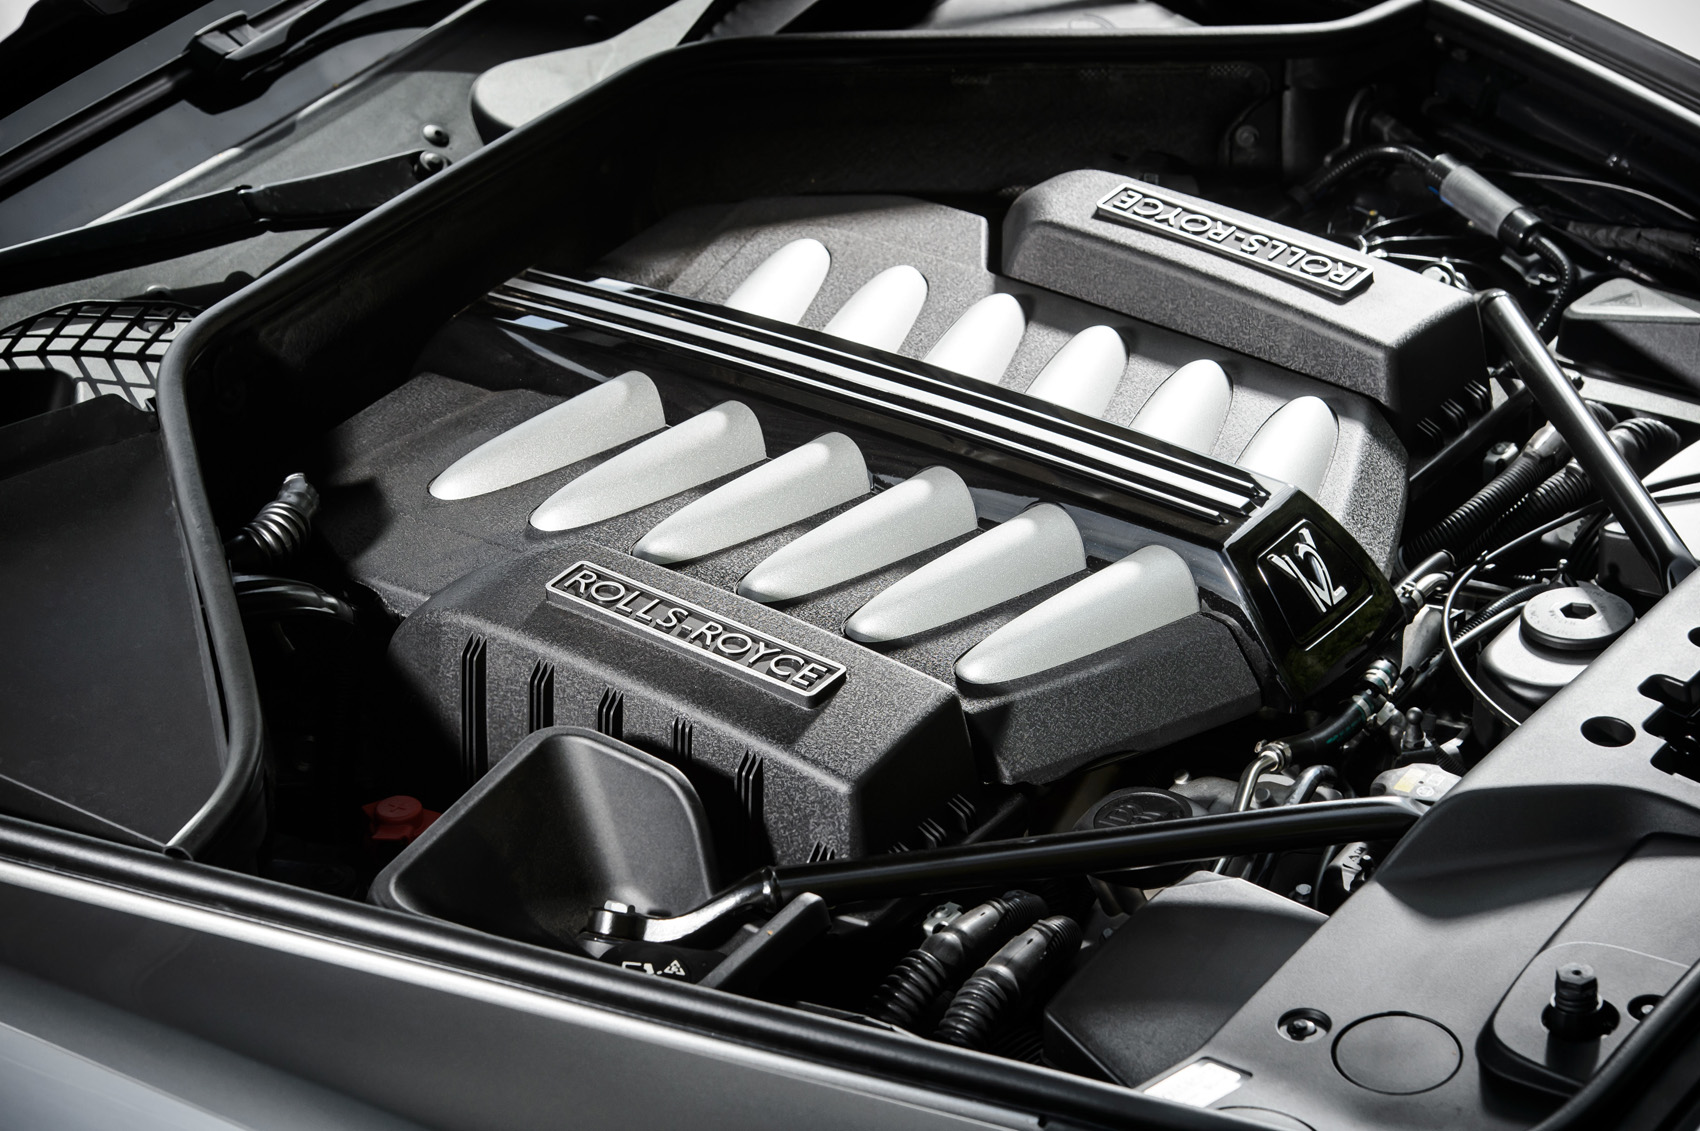 6.5-litre V12 Rolls-Royce Ghost V12 engine